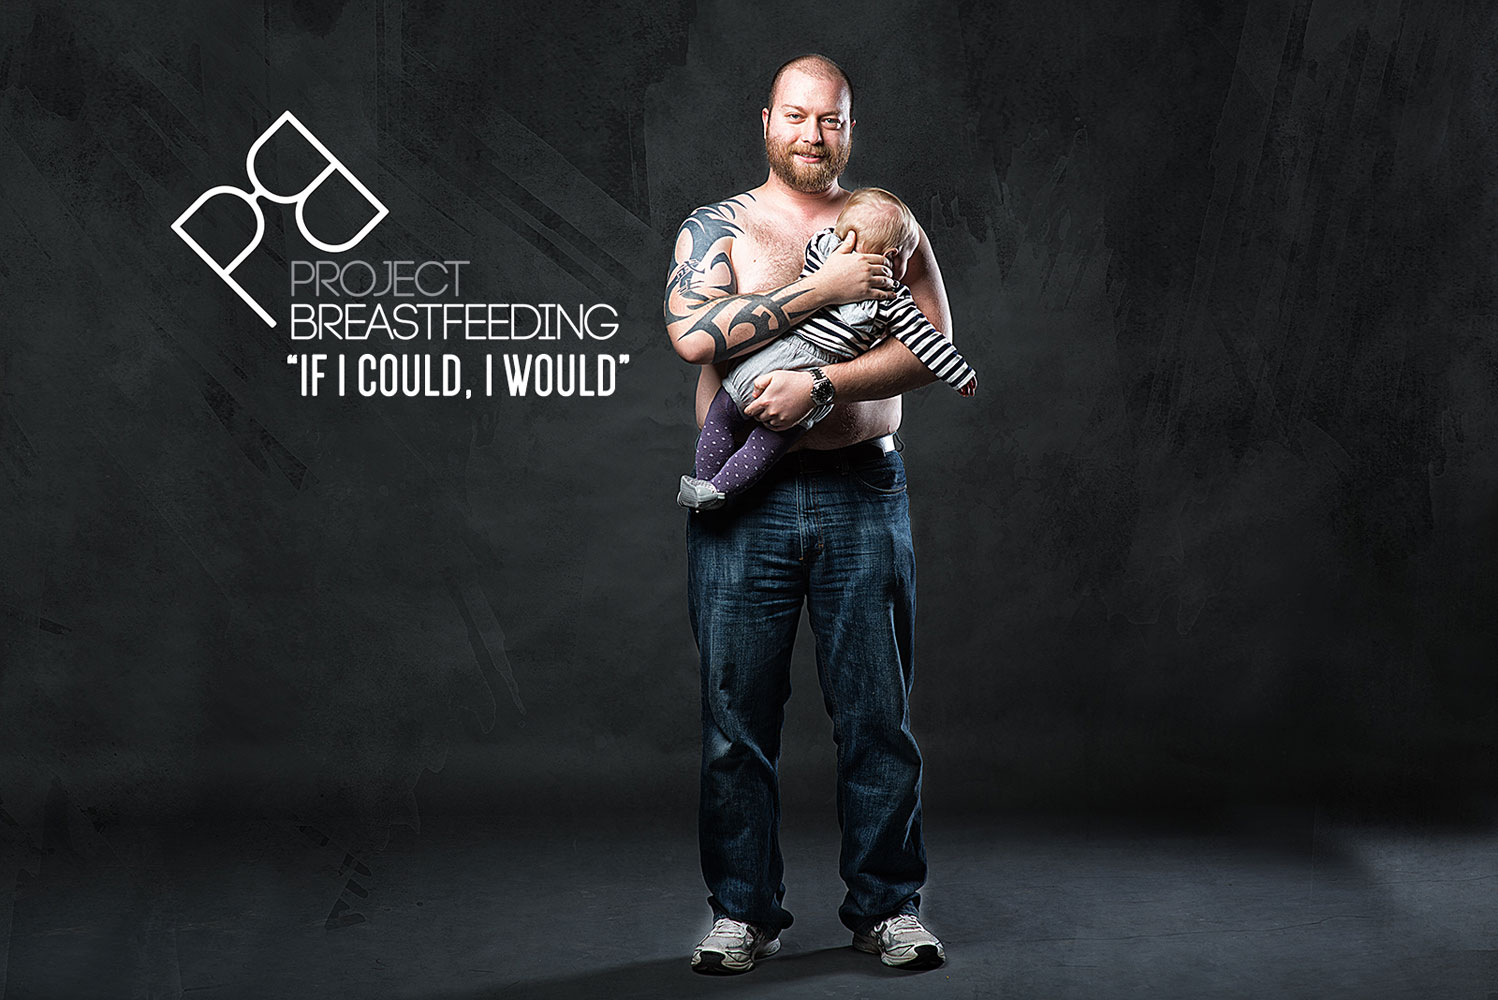 Controversial photos breast feeding age